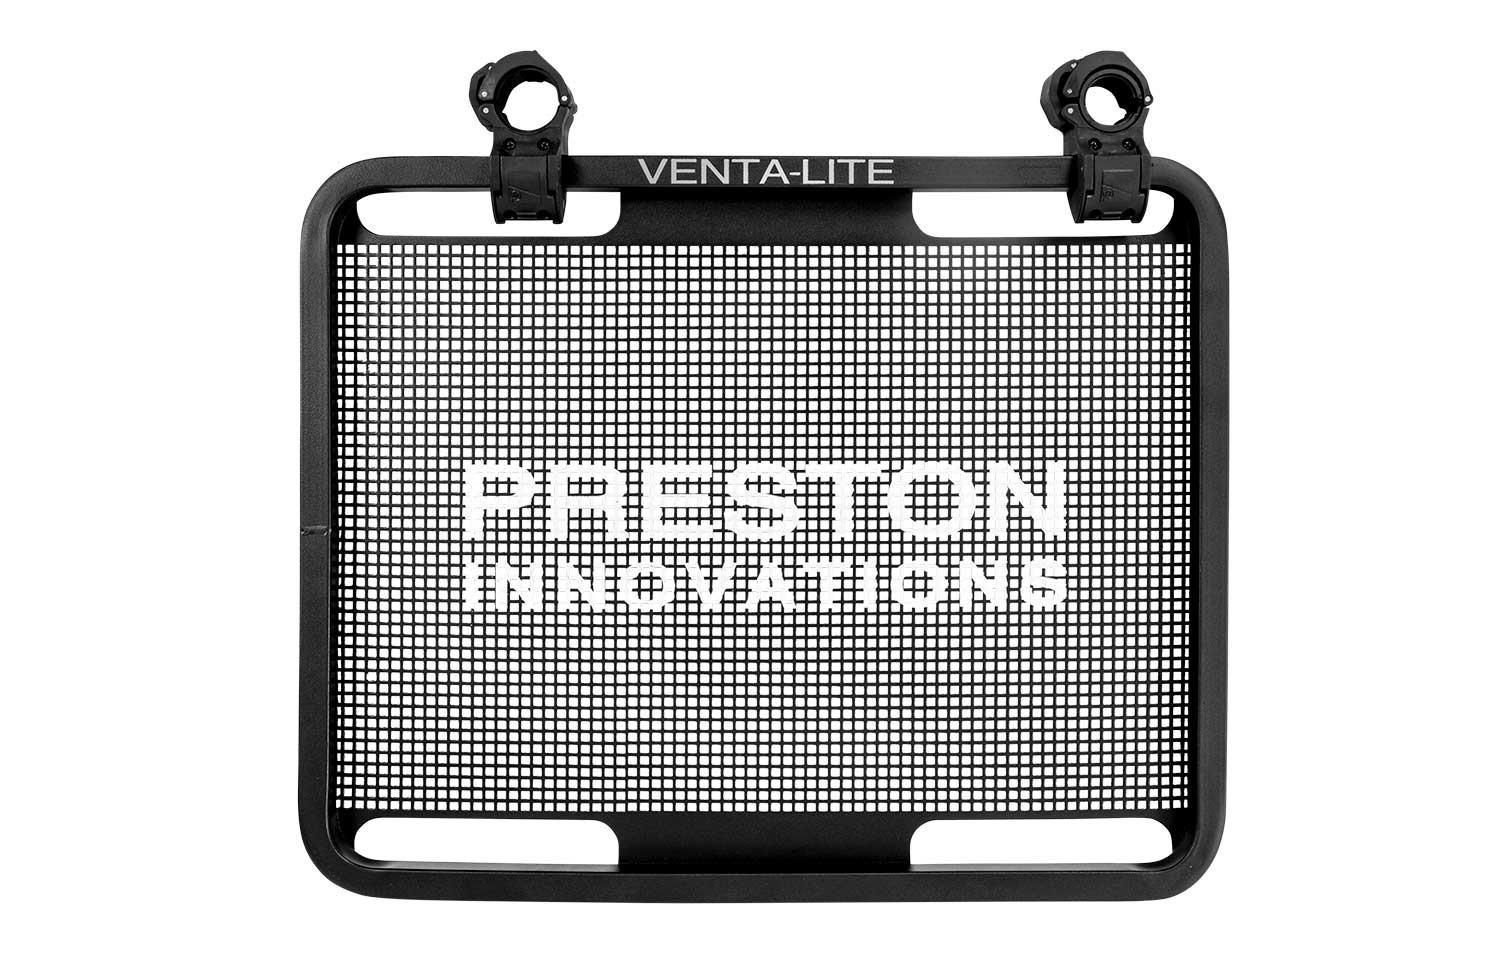 Preston Venta-Lite Side Tray - Large - Seitentablett